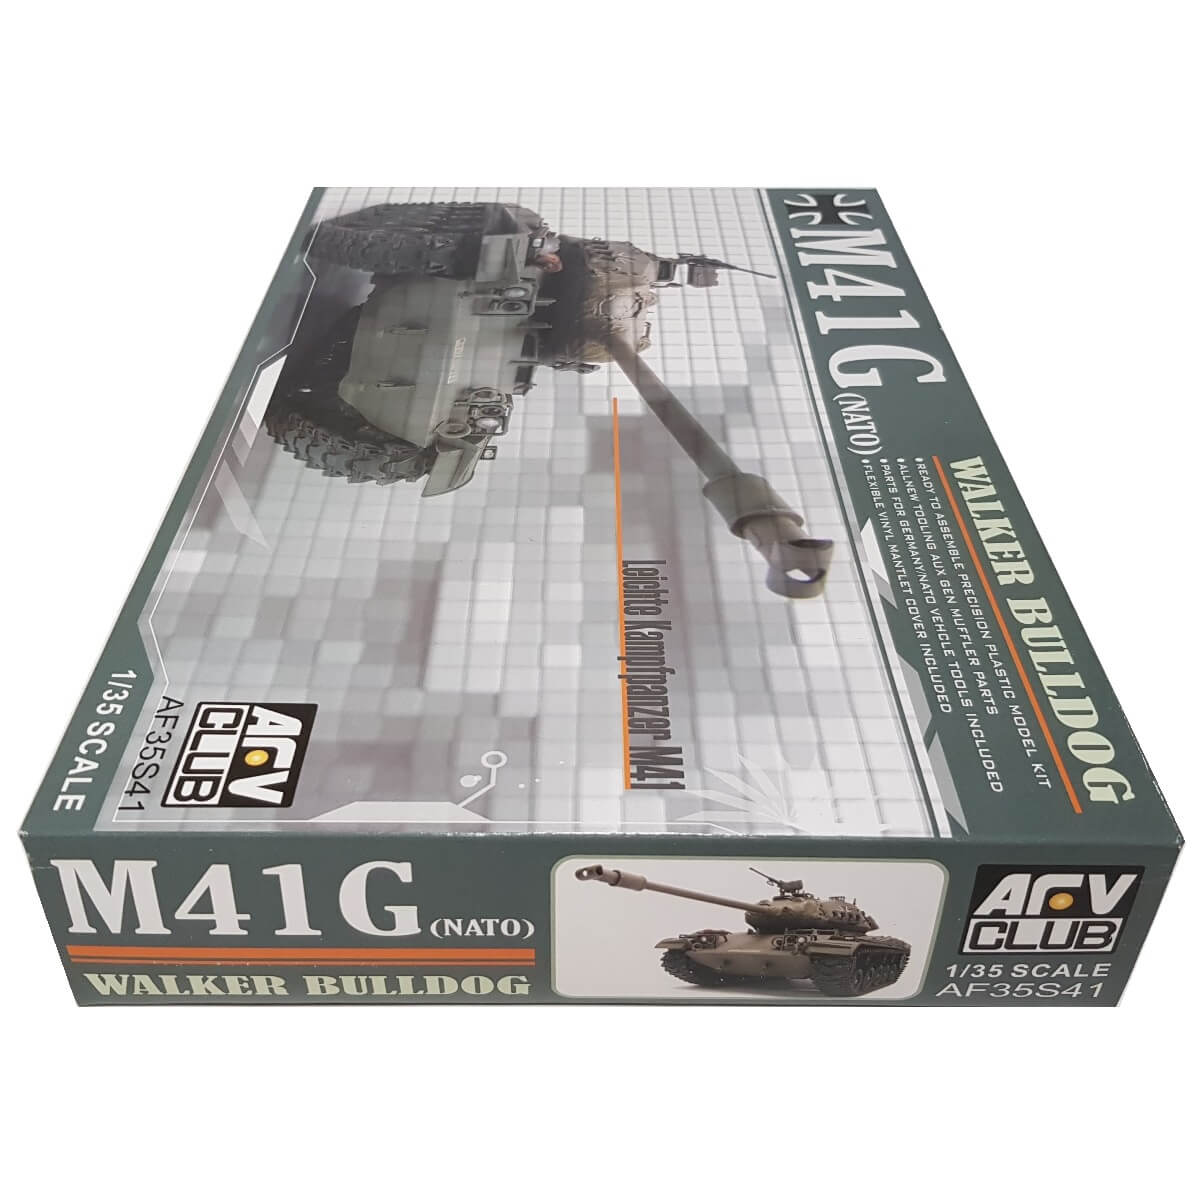 1:35 M41G NATO Walker Bulldog - AFV CLUB